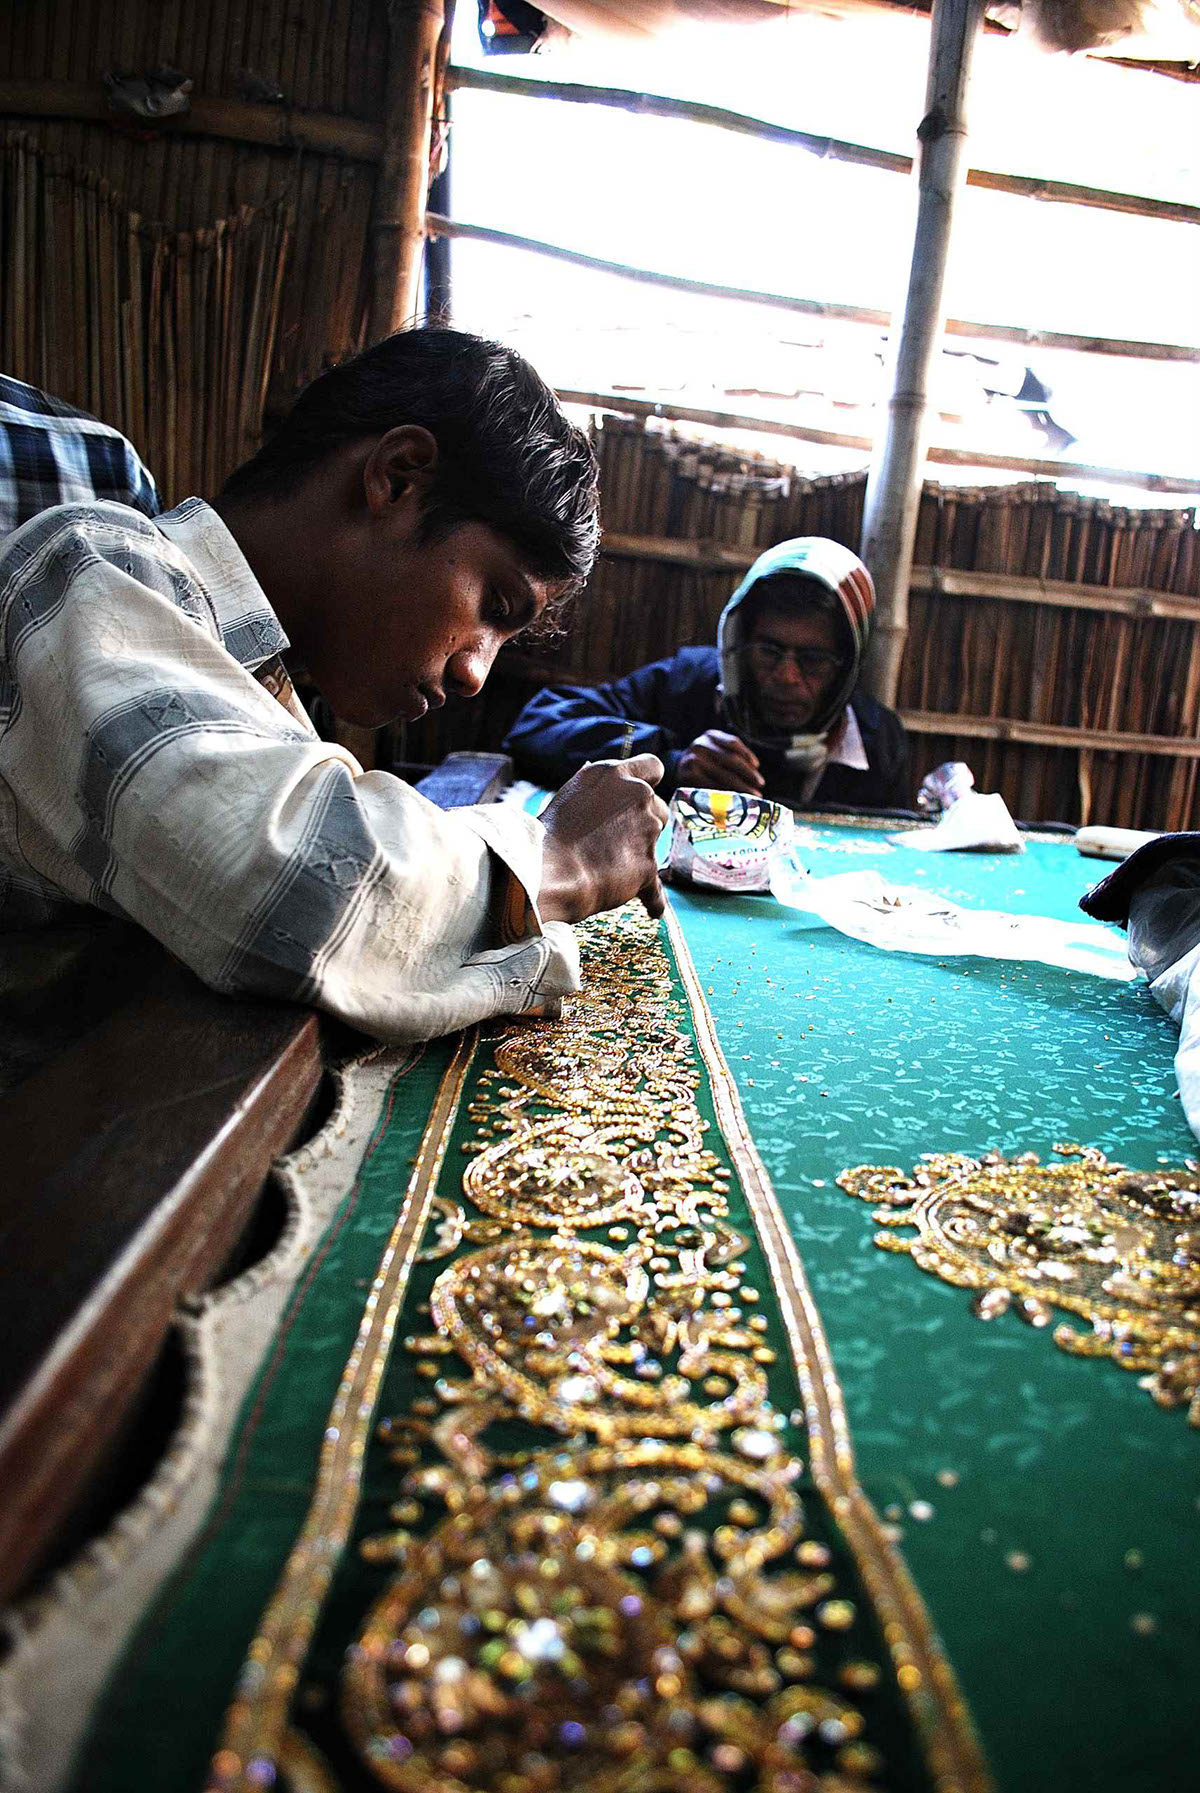 India zardozi handicraft heritage Embroidery Threads gold silver zari work Kolkata Sari Ethnic traditional culture mughal